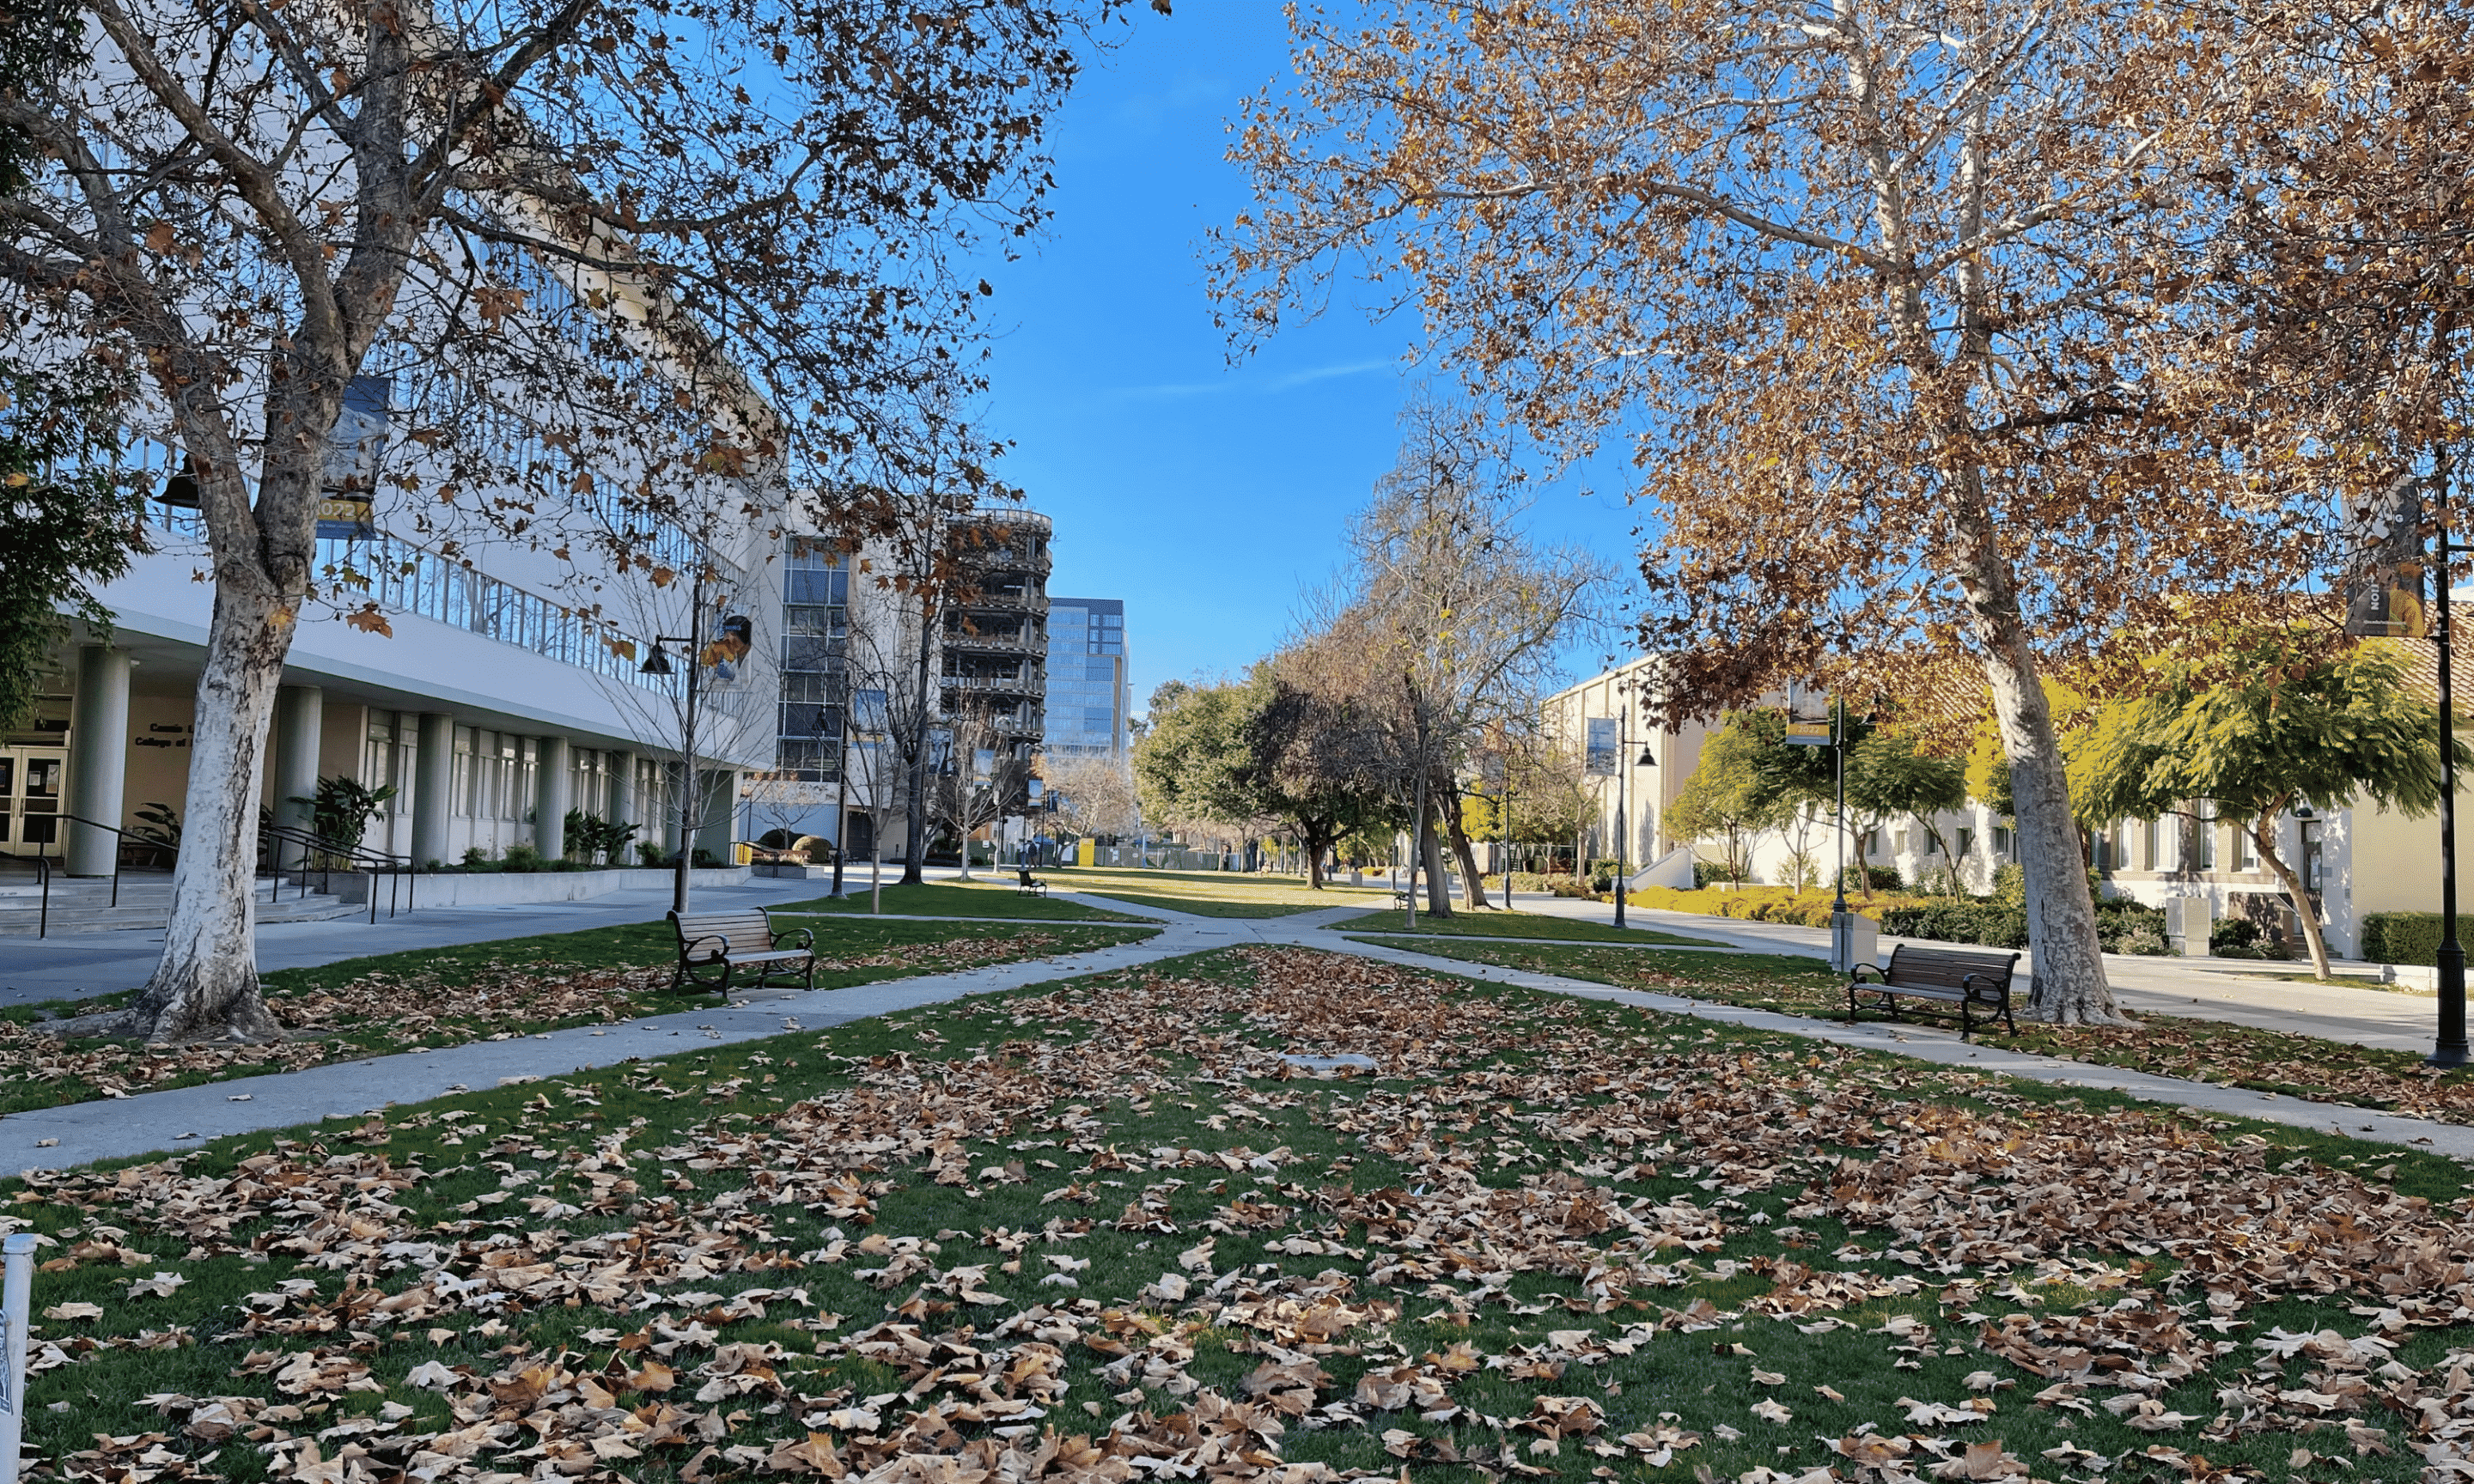 urban tree canopy goals on a private campus versus public land